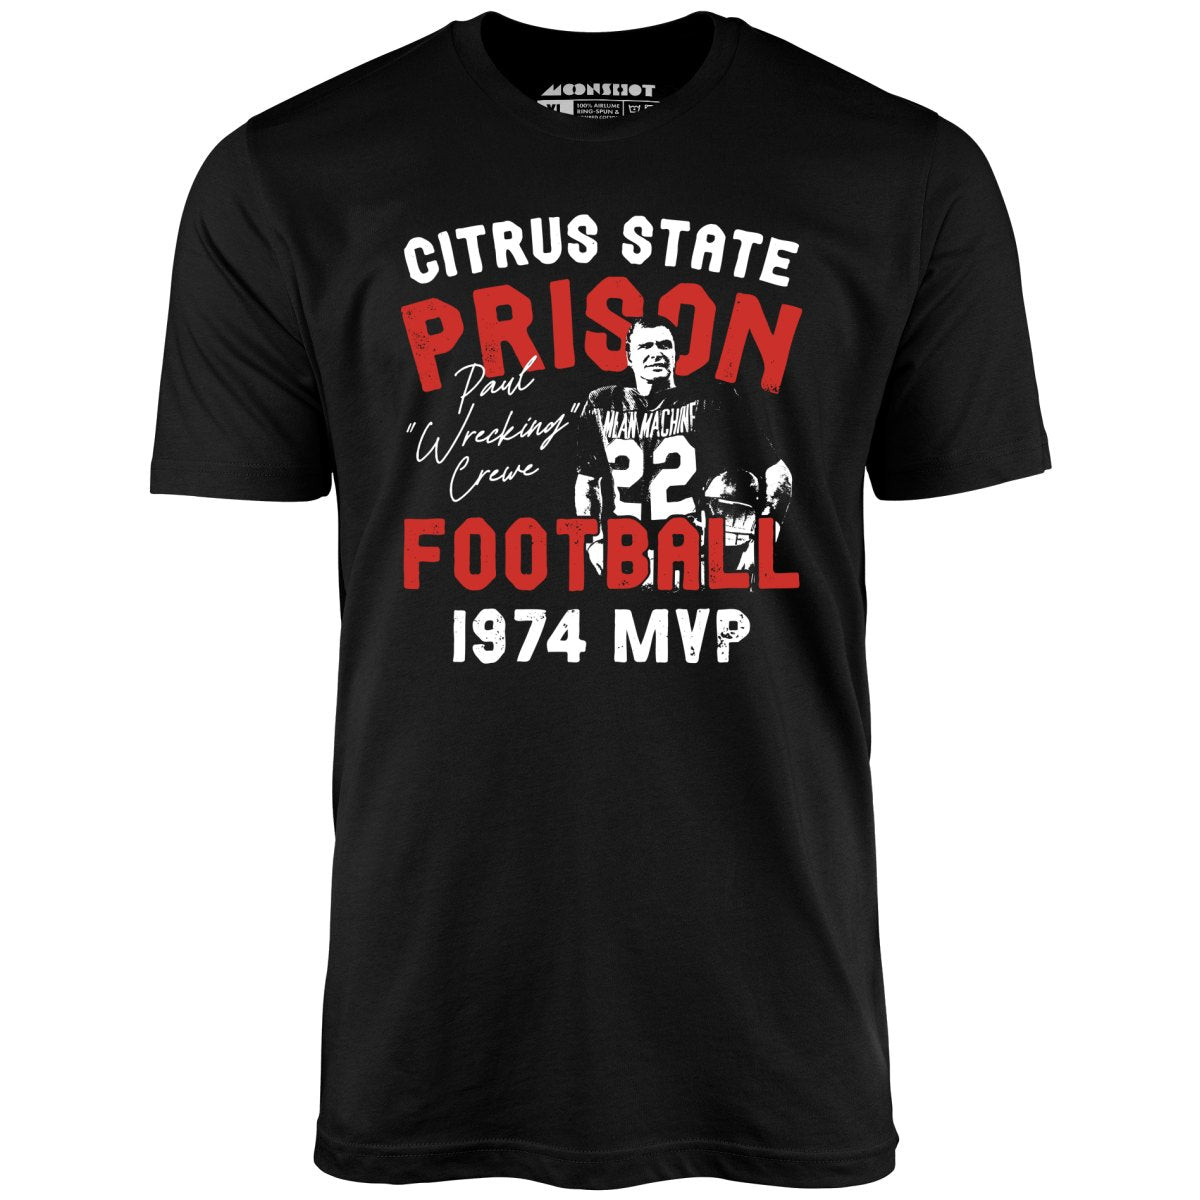 Mean Machine Citrus State Prison Football - Unisex T-Shirt